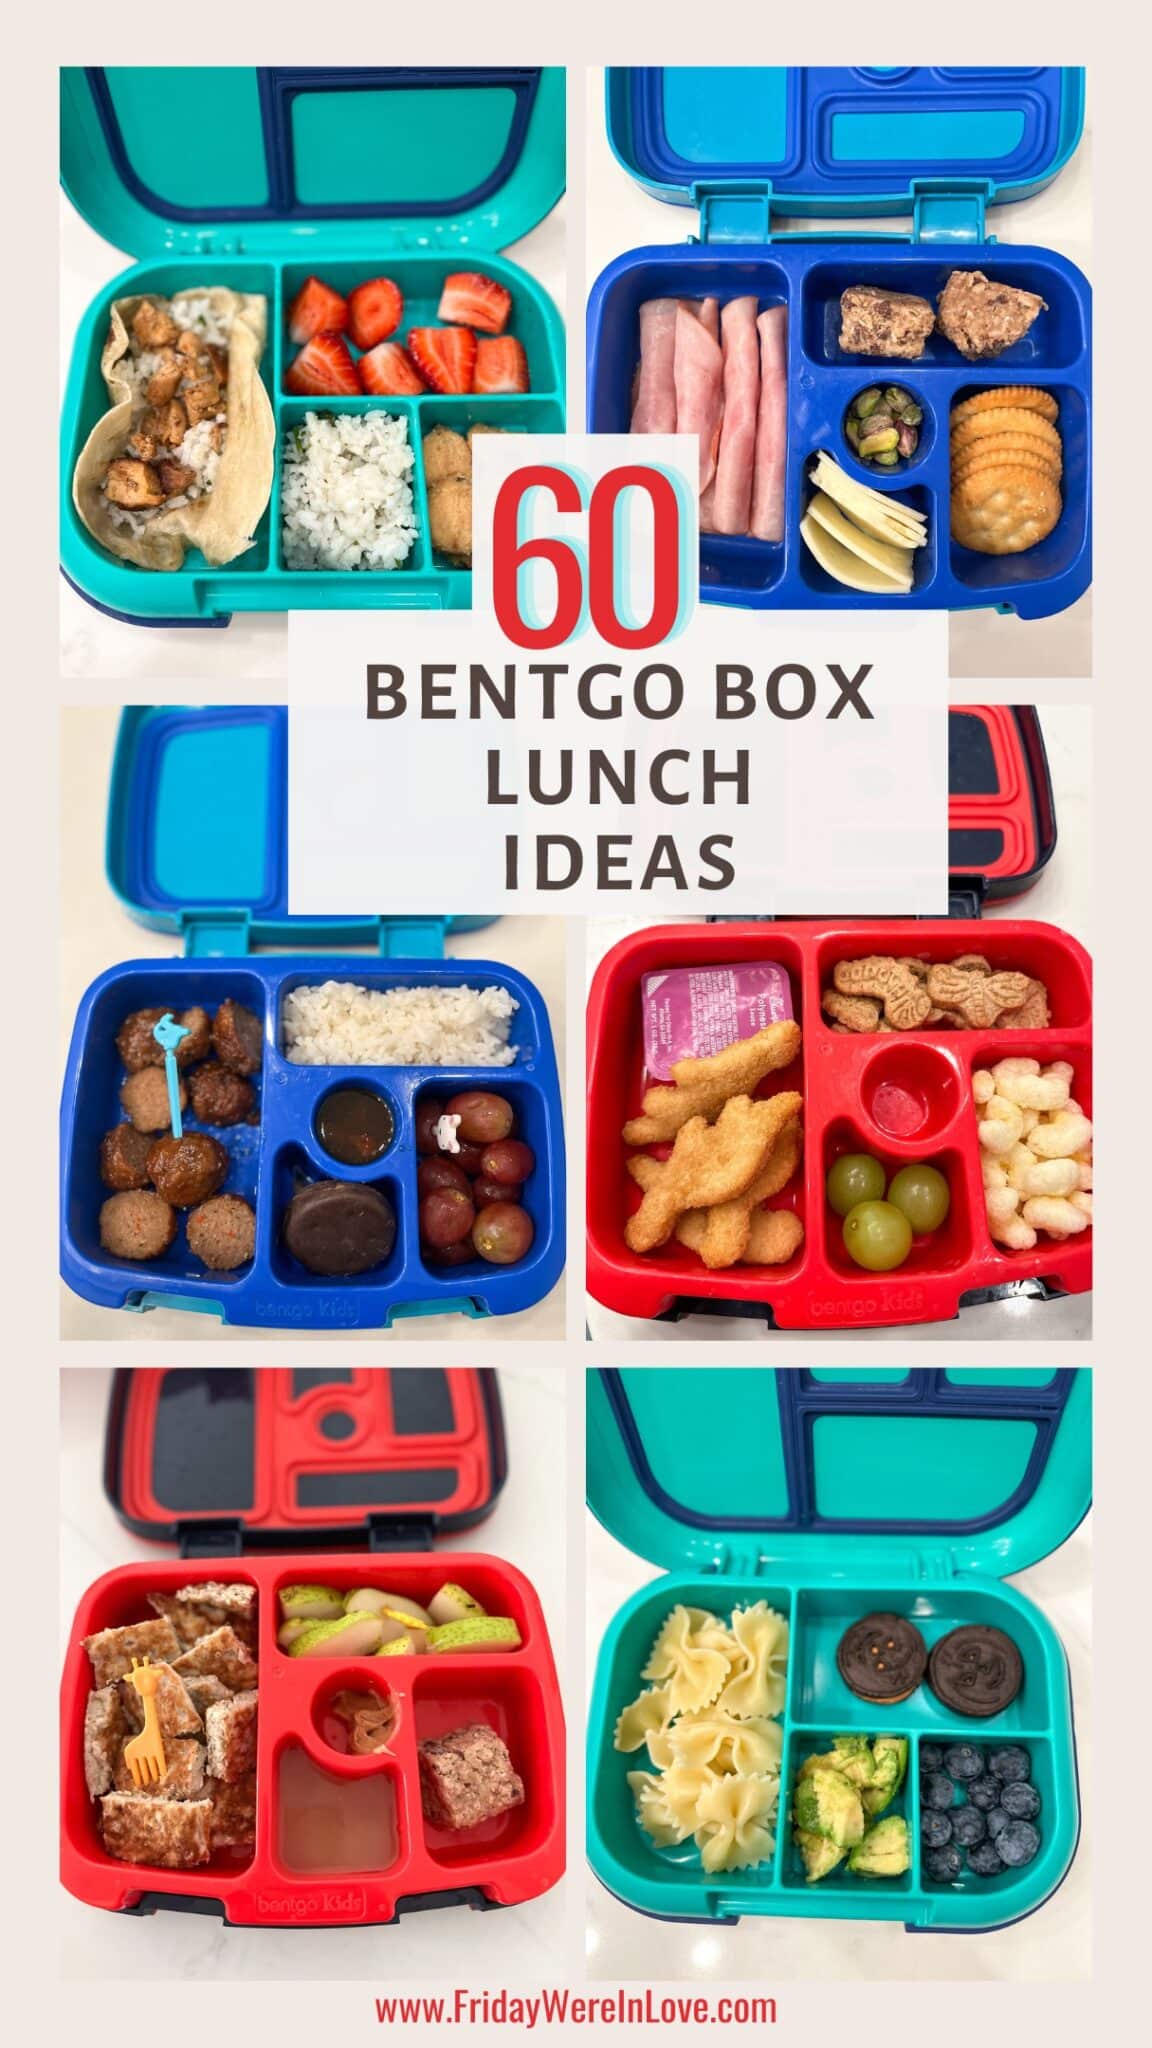 60+ Bentgo lunch box ideas title image. 